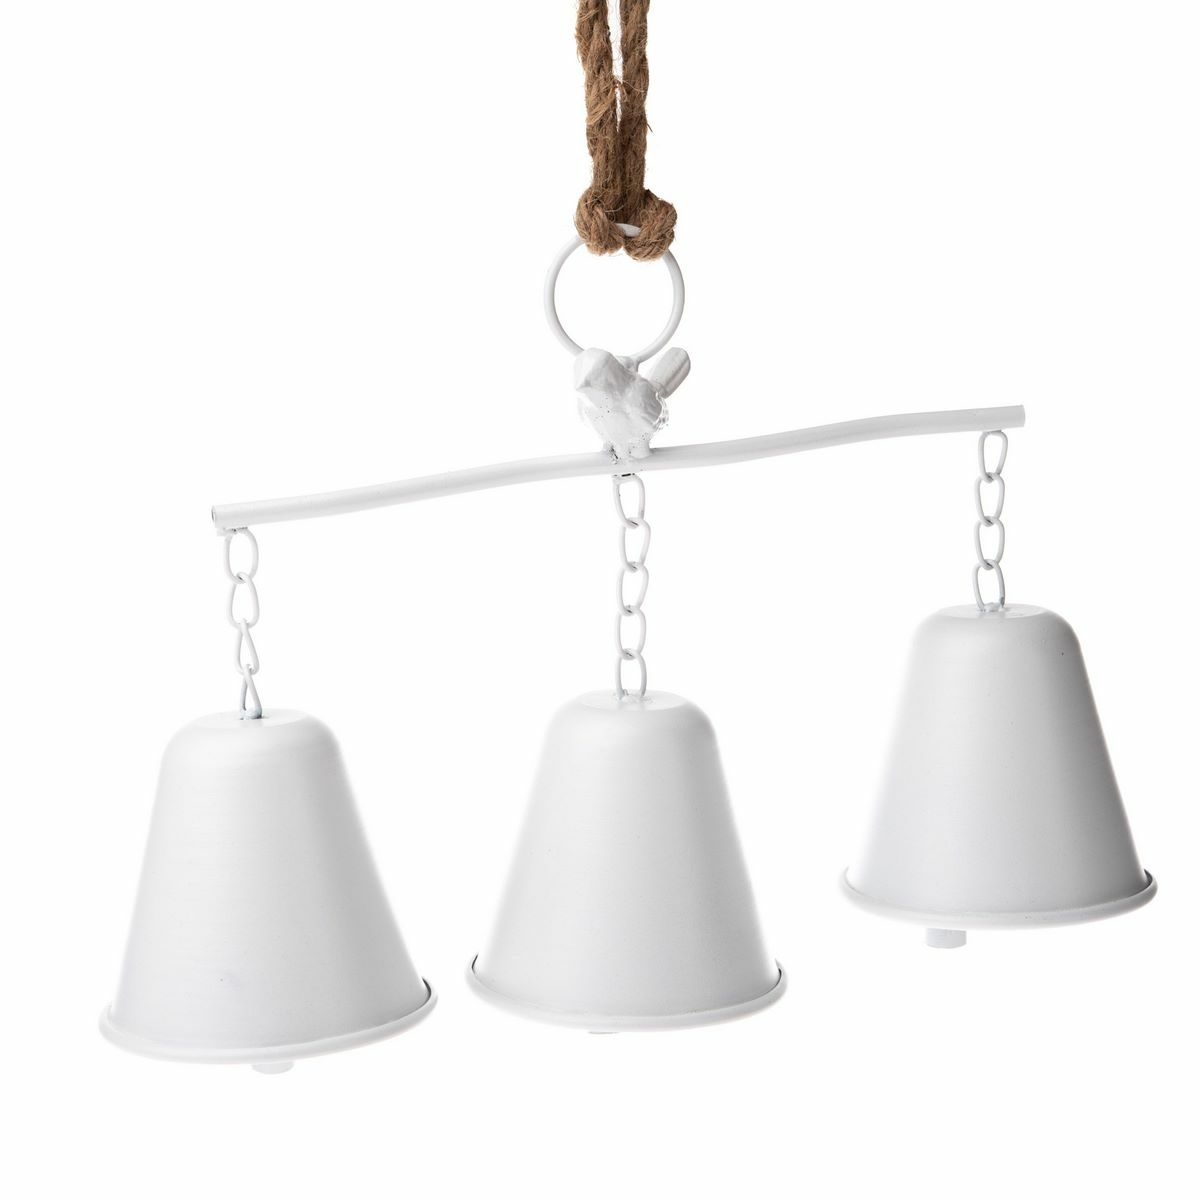 Fotografie Kovové zvonky na tyčce Ringle bílá, 28 x 20 cm